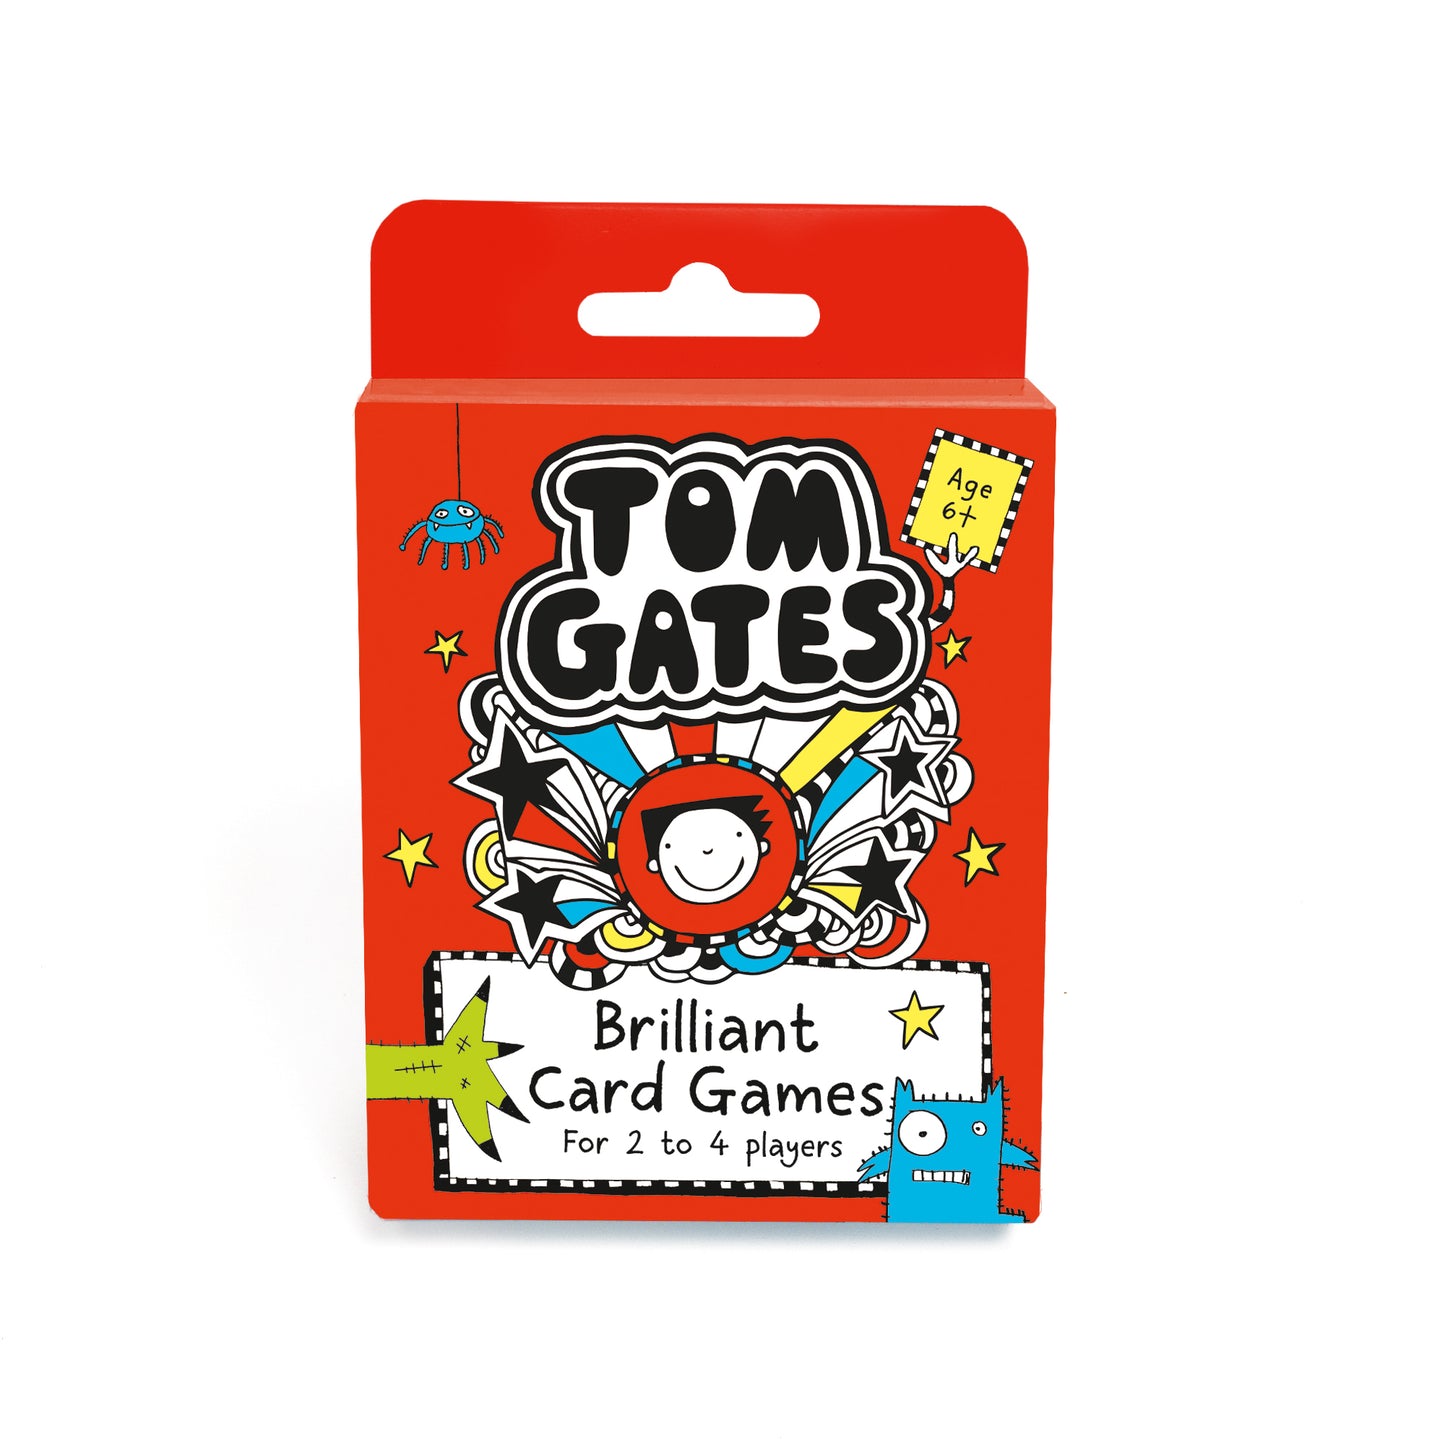 Tom Gates Brilliant Card Games